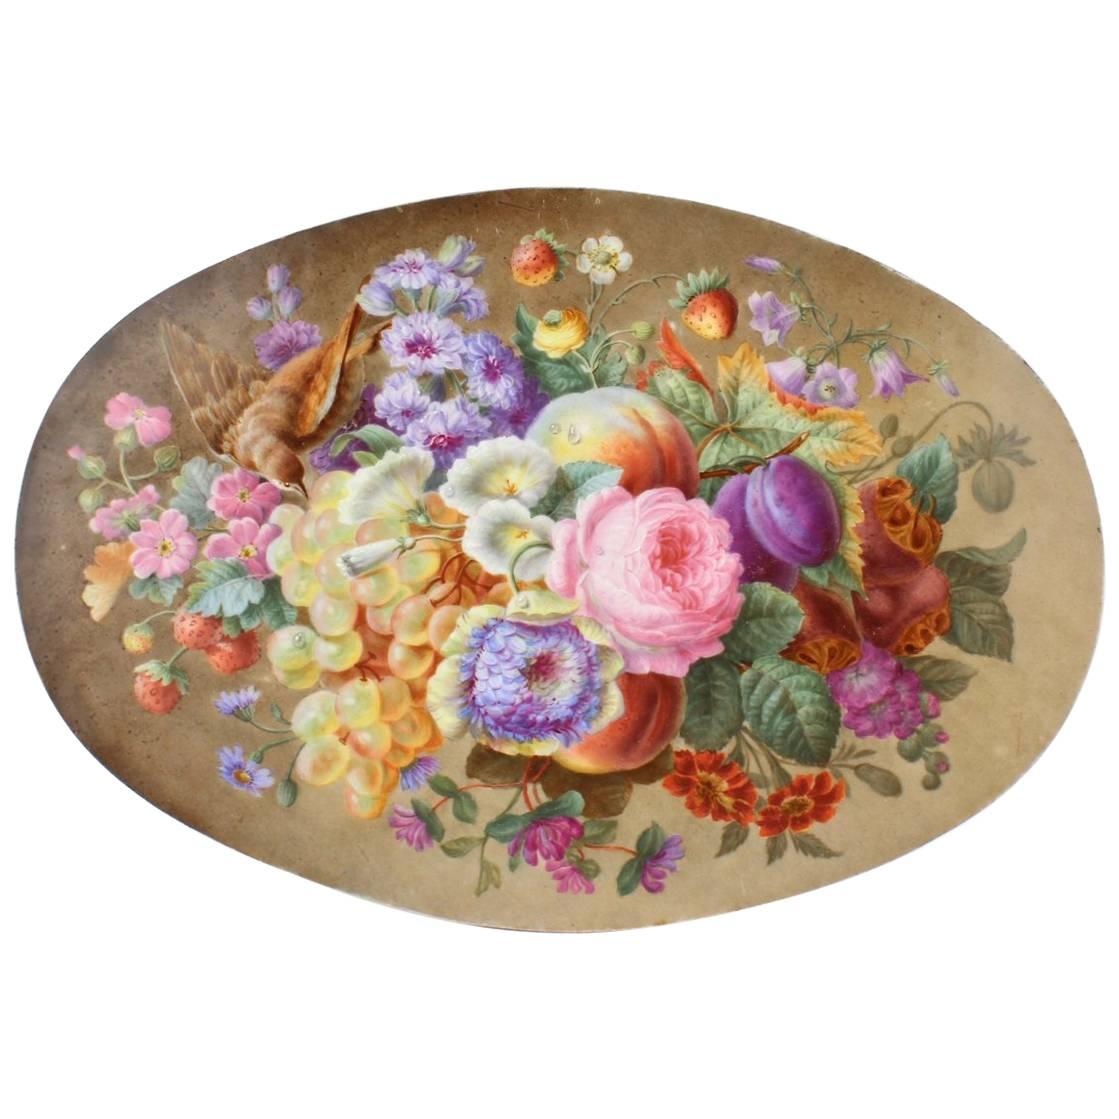 Large Antique English Porcelain Plaque of Fruit, Flowers & a Bird, 19th Century